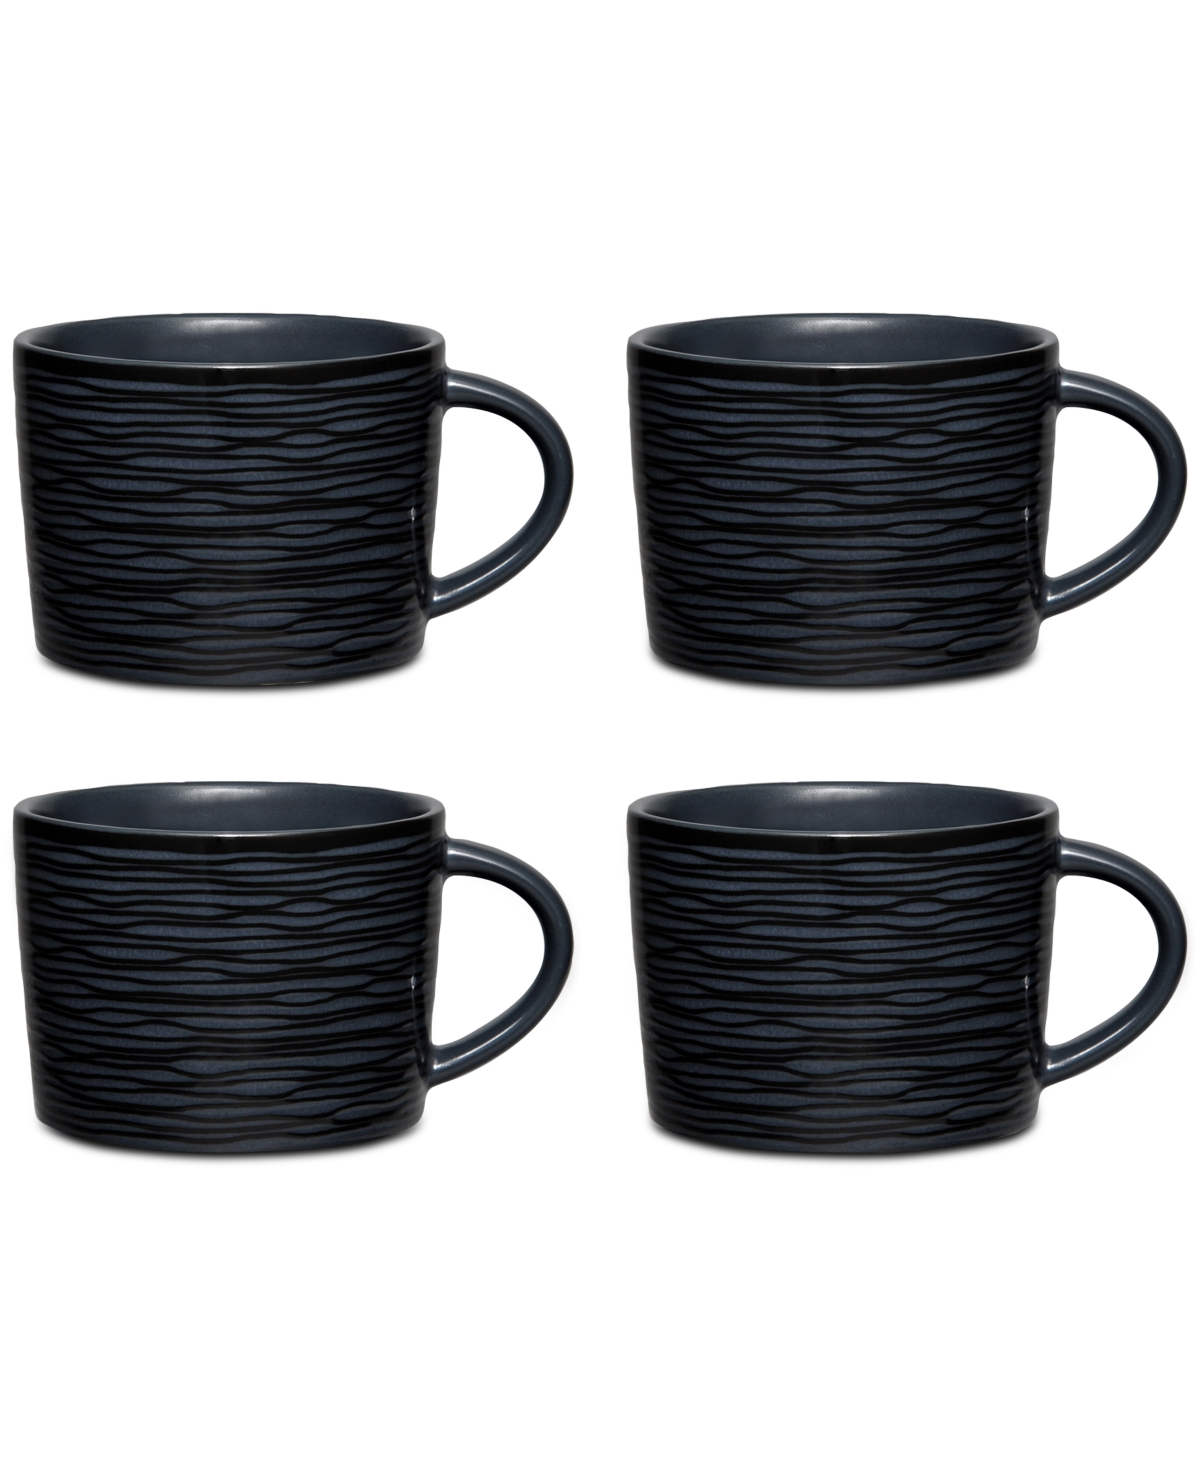 Noritake Swirl Cups, Set Of 4 In Black